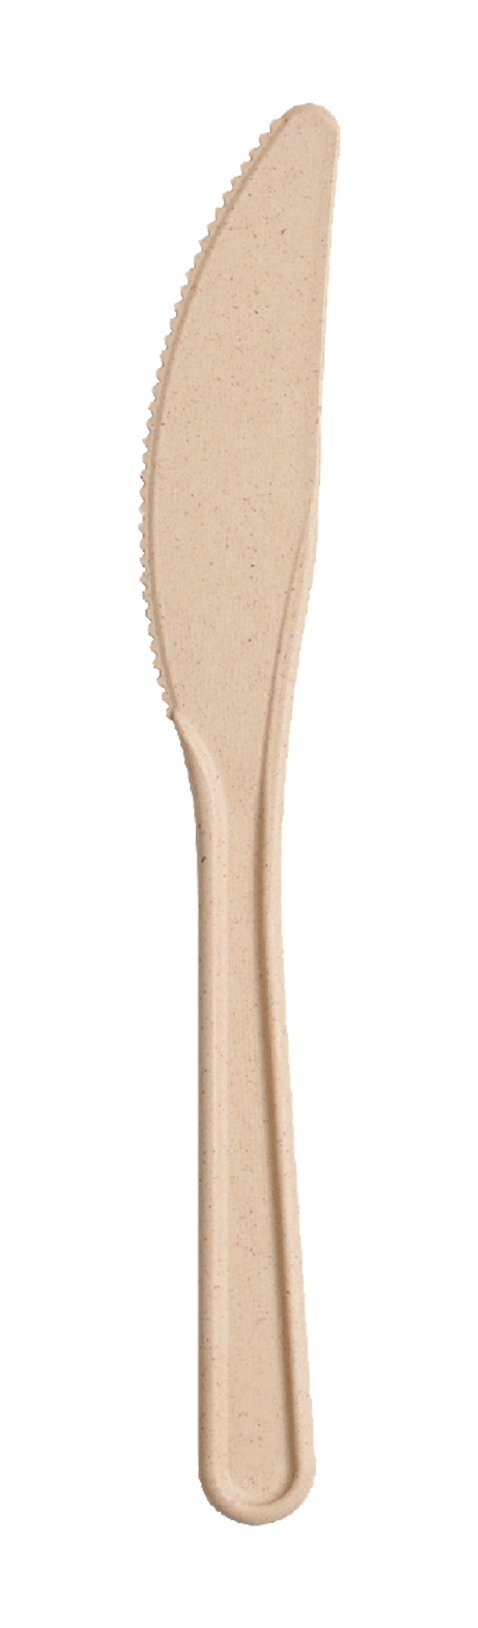 bamboo knive